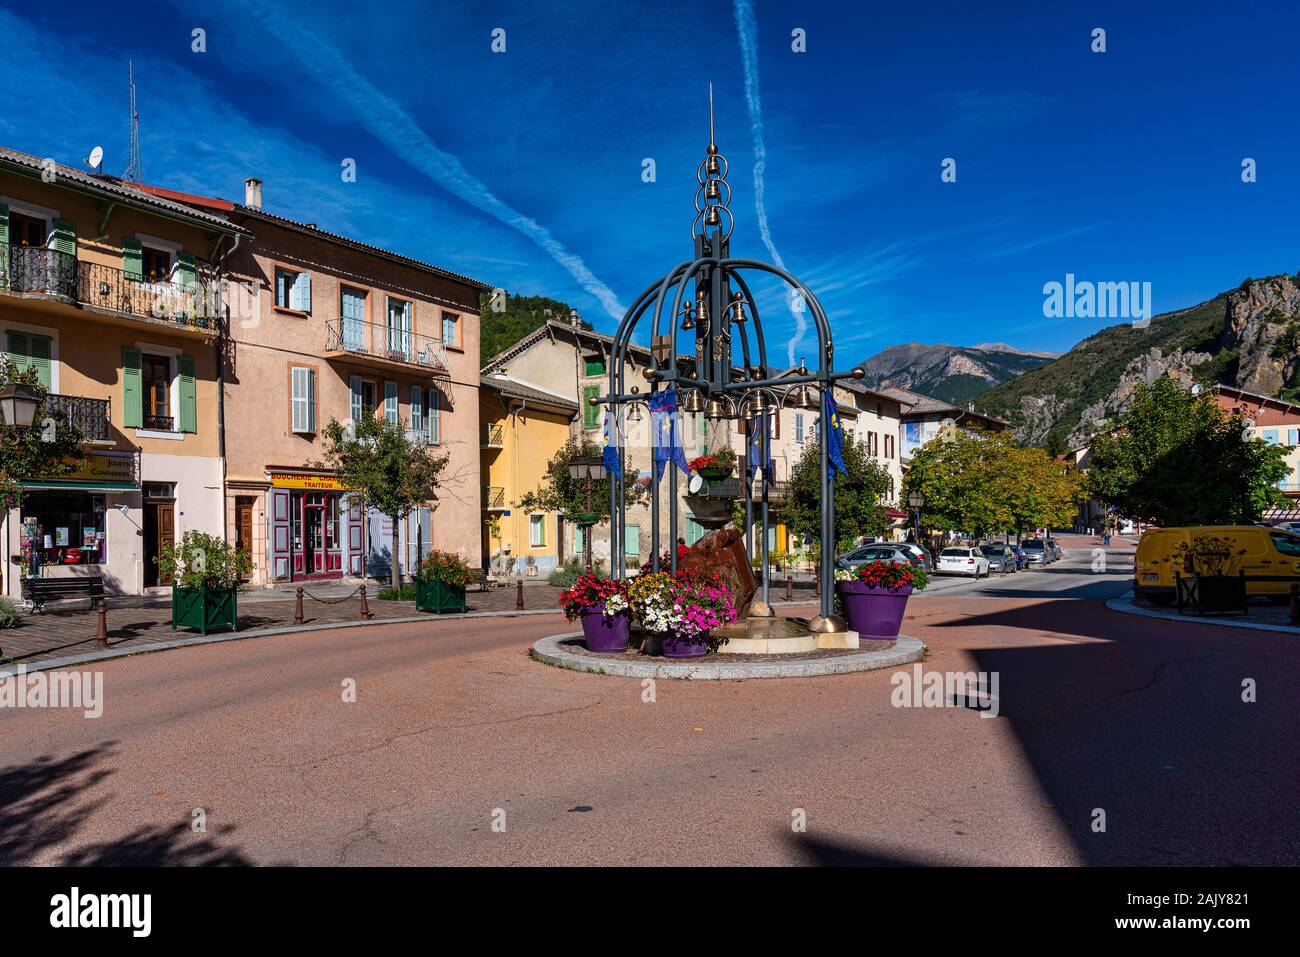 The village Guillaumes in Gorges de Daluis. Provence-Alpes-Cote d'Azur region of France. Stock Photo